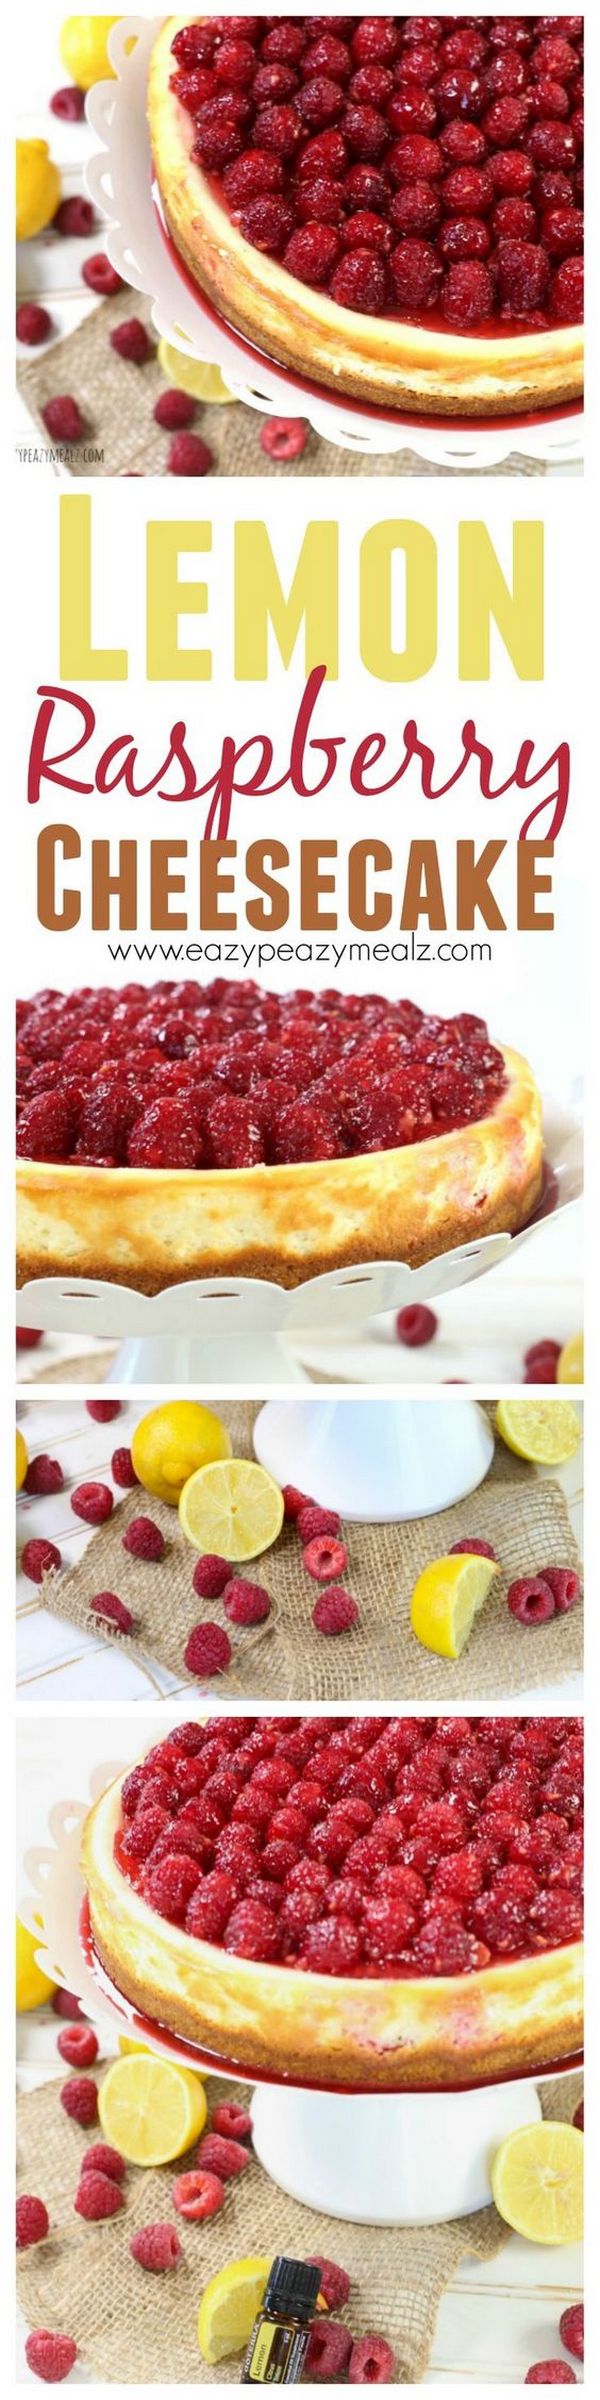 Lemon Raspberry Cheesecake Recipe